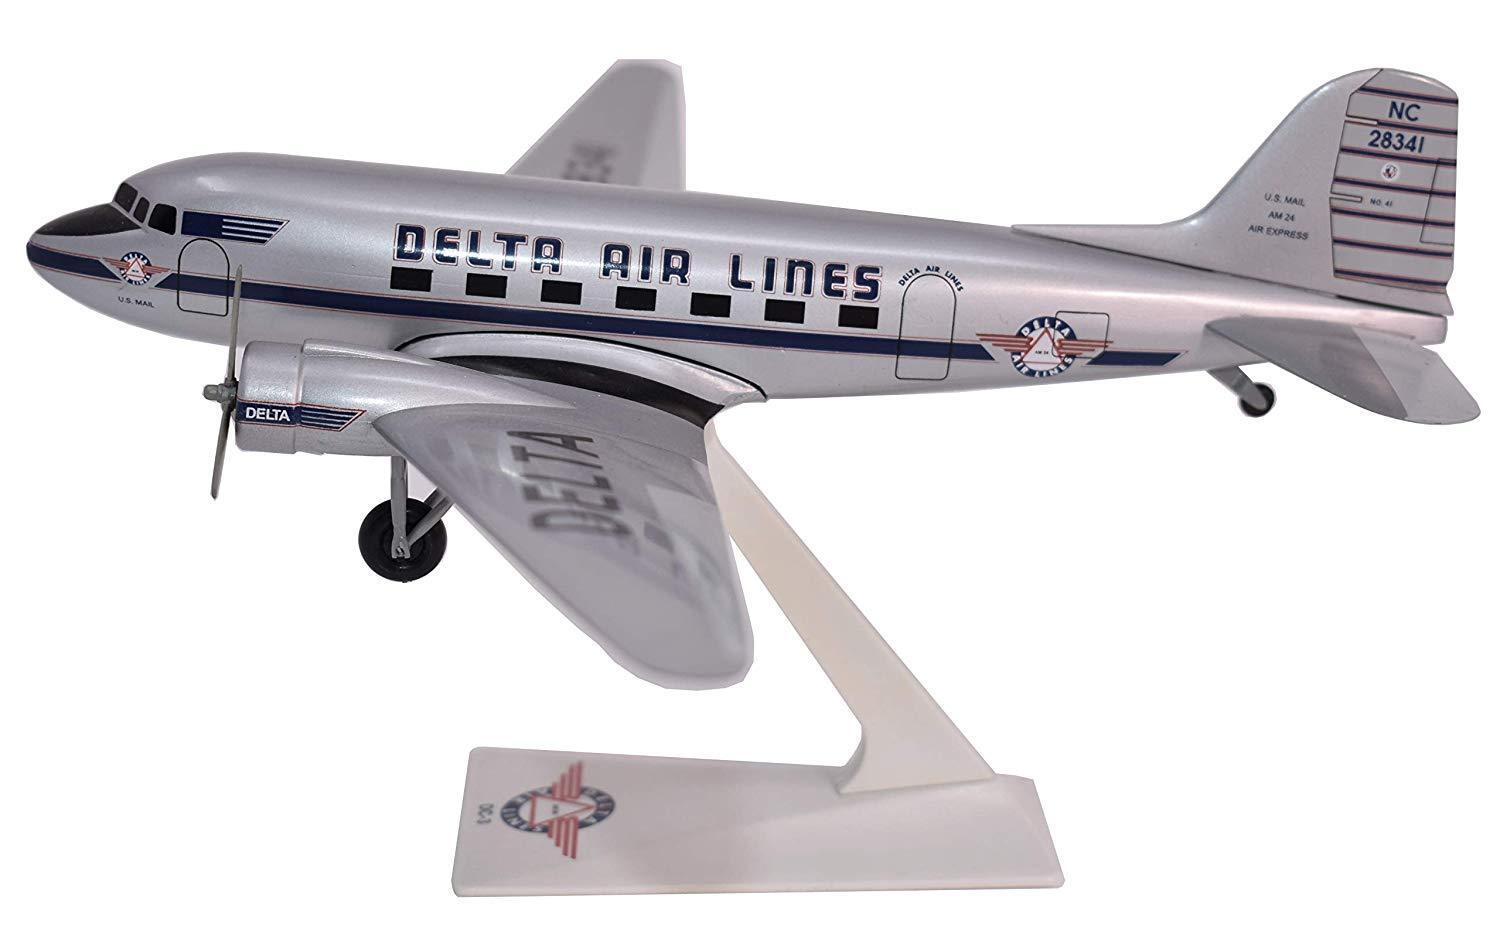 Flight Miniatures Delta Airlines DC-3 Ship 41 Desk Display 1/100 Model Airplane